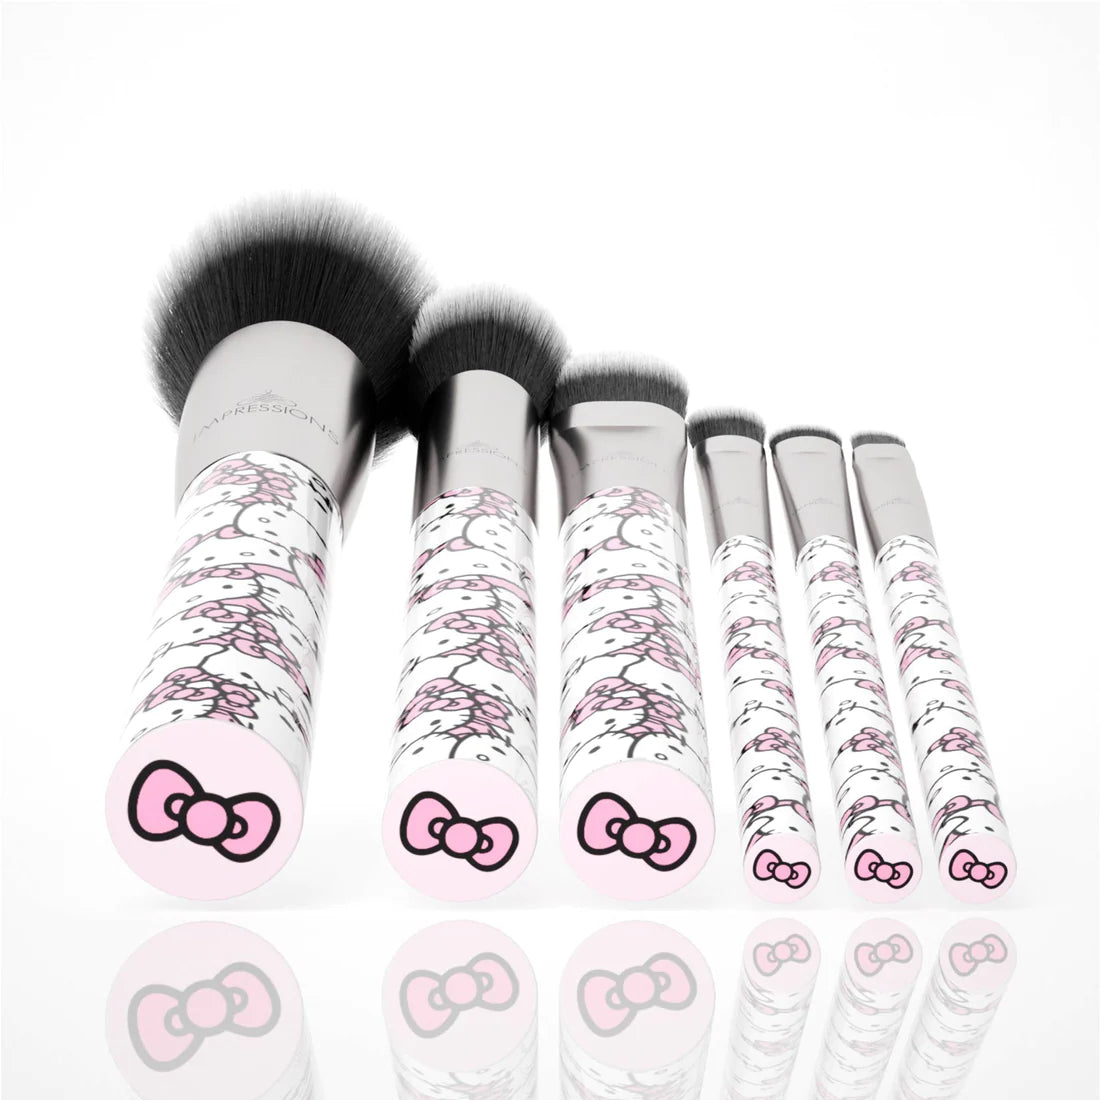 Impressions Vanity - Hello Kitty All Over Print 6pc Brush Set